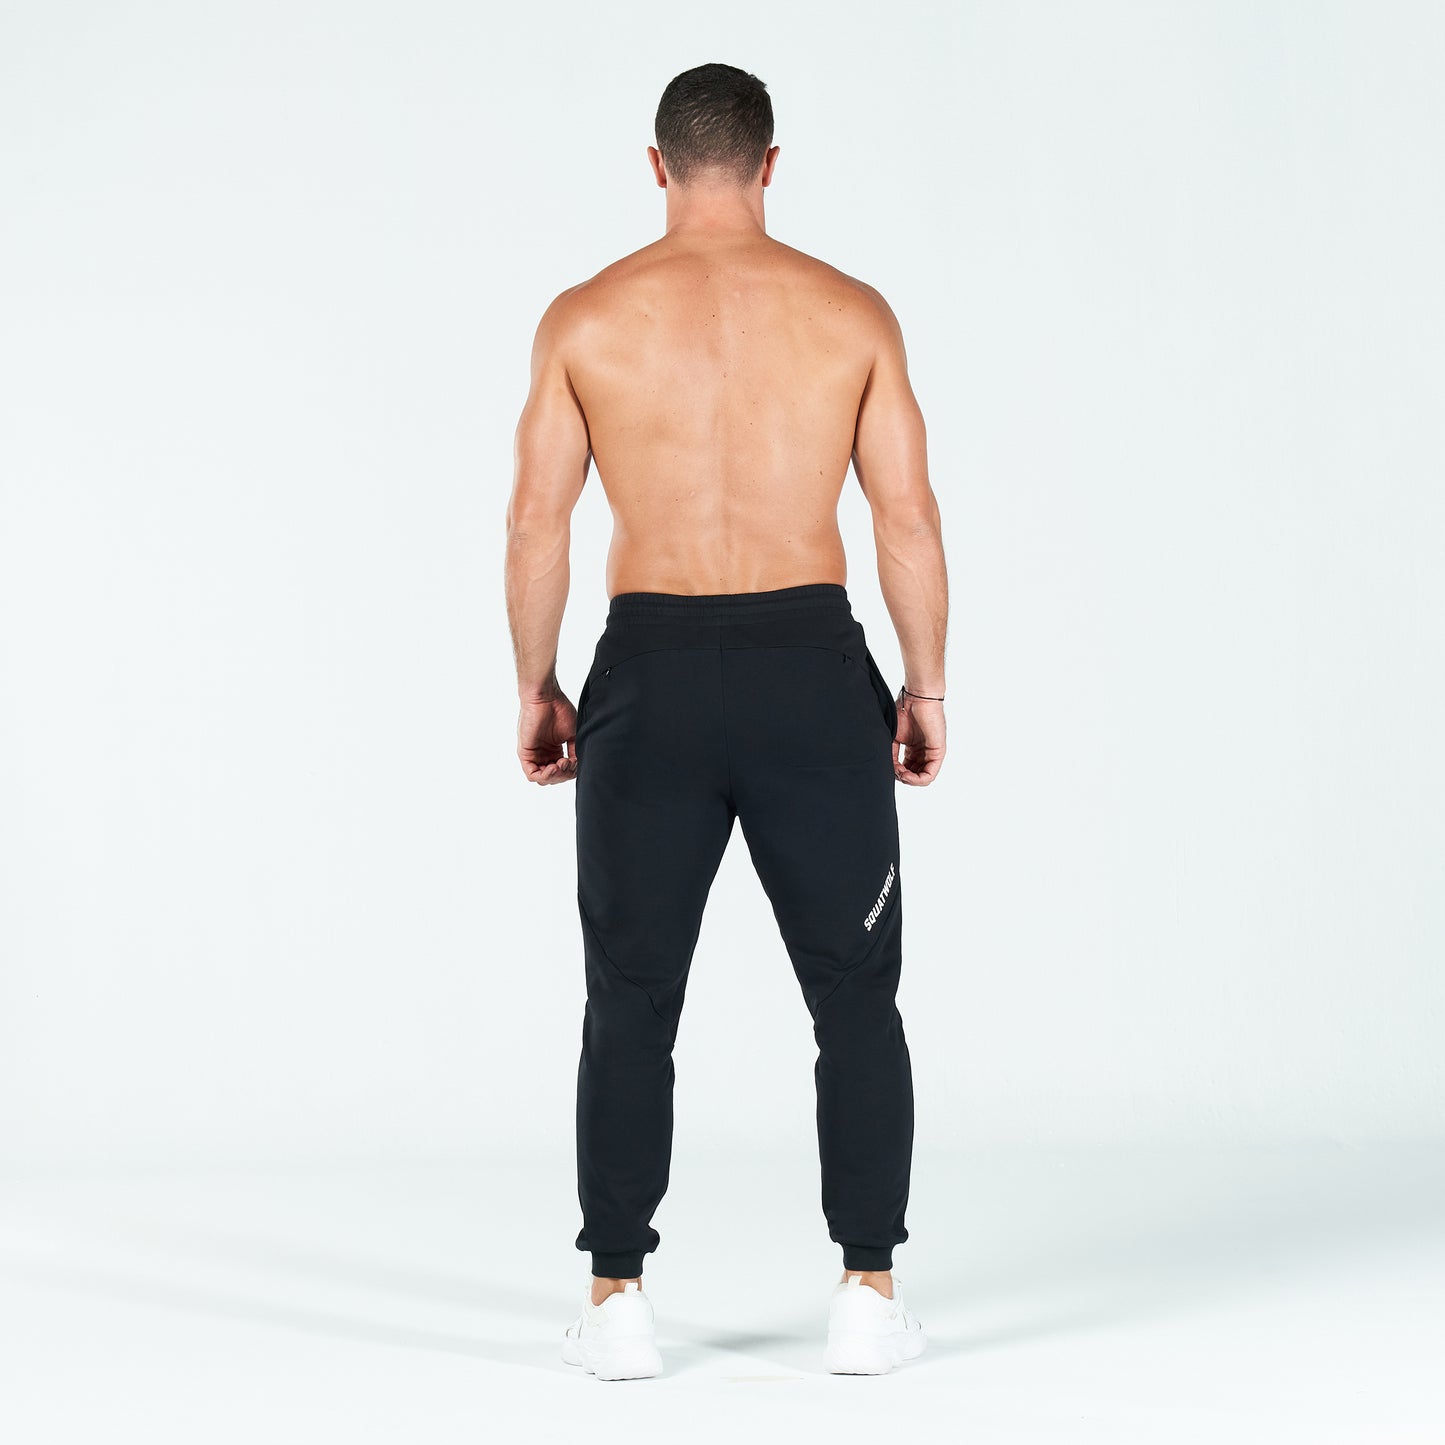 squatwolf-workout-clothes-core-stay-active-joggers-black-gym-pants-for-men